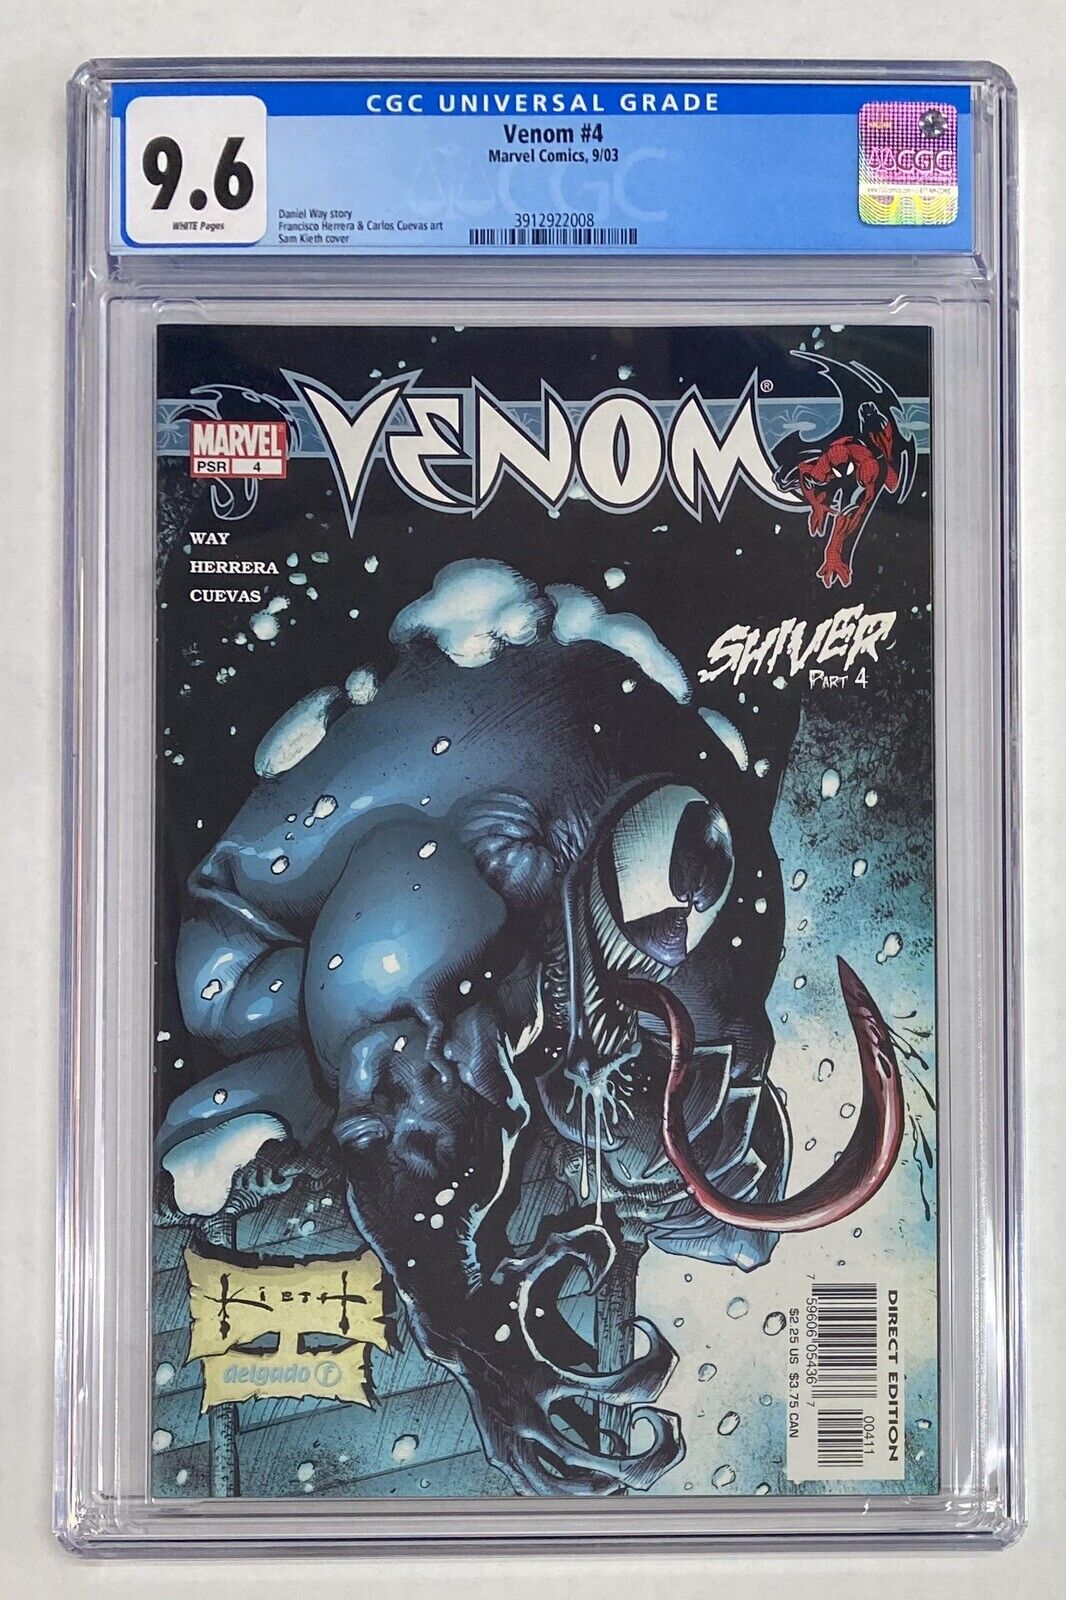 Venom #4 CGC Graded 9.6 Marvel September 2003 White Pages Comic Book Sam Keith